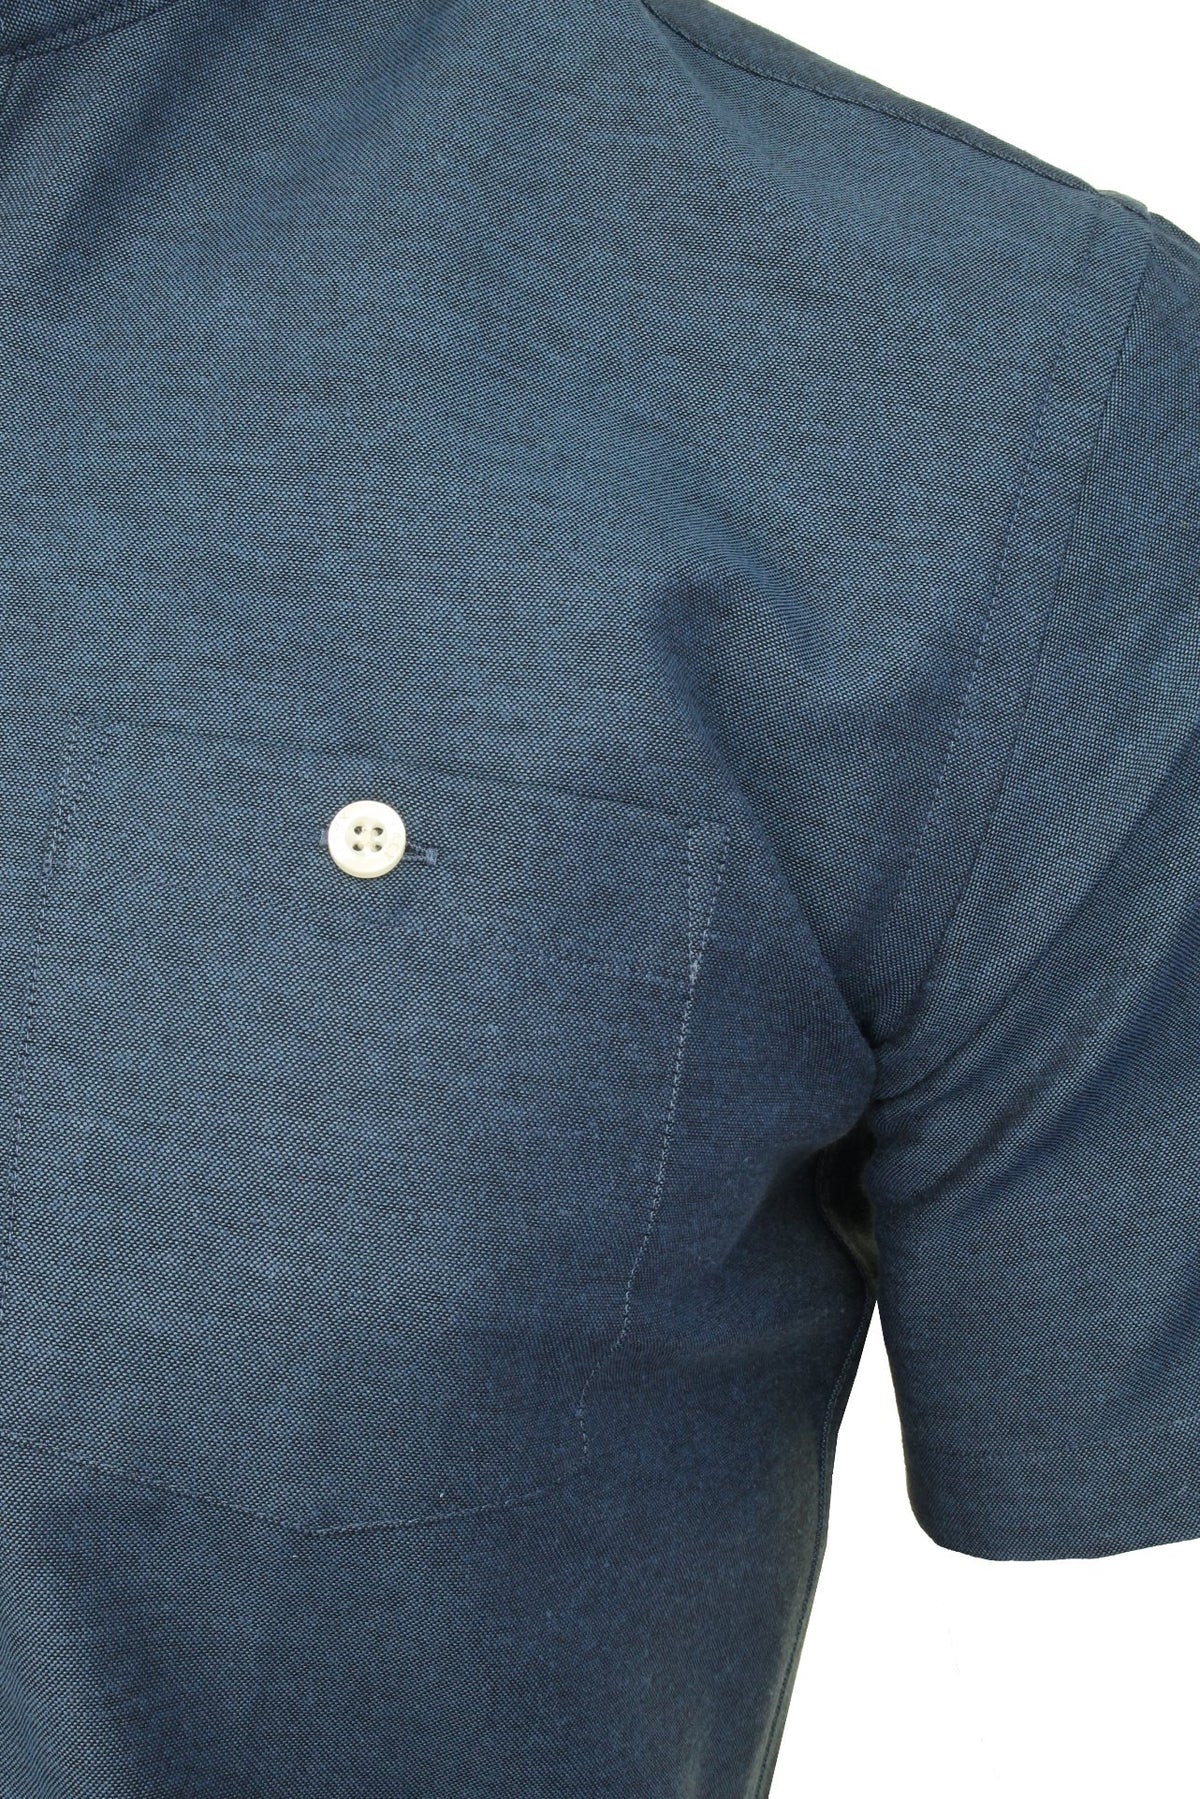 Xact Men's Grandad Collar Oxford Shirt Slim Fit Short Sleeved, 02, Xsh1022, Denim Blue